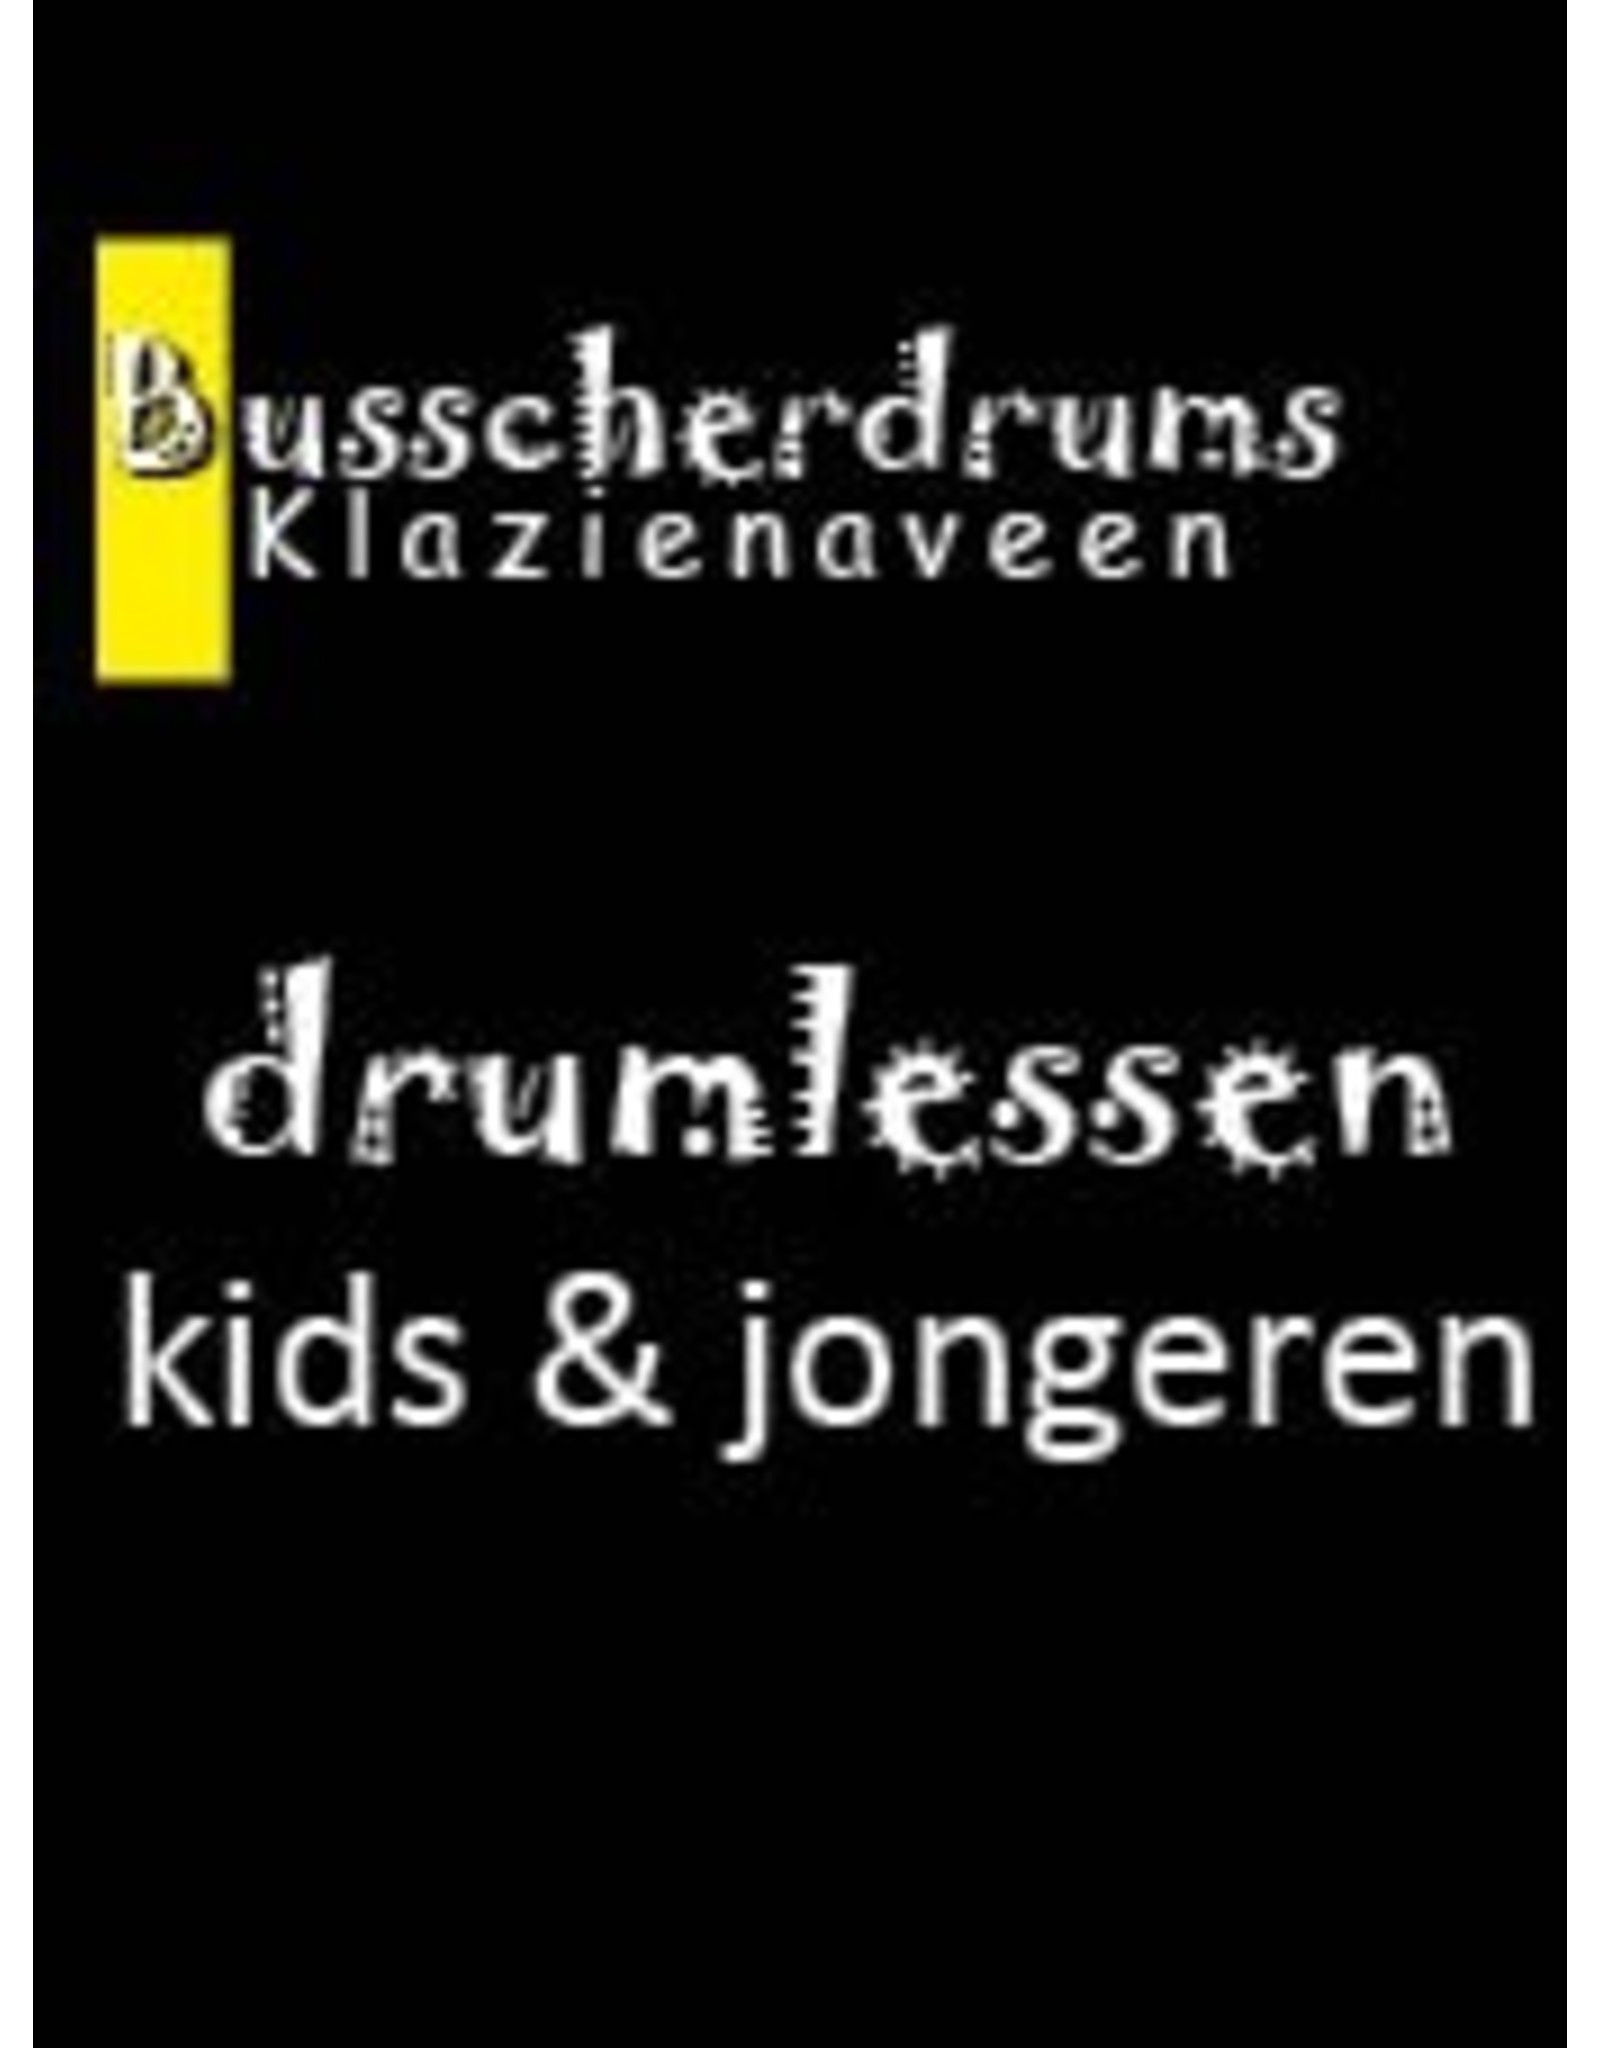 Busscherdrums Drum Lessons FLEX 2Lessenkaart 30 Minuten Einzelschlagzeugunterricht Kinder & Jugend 901-2